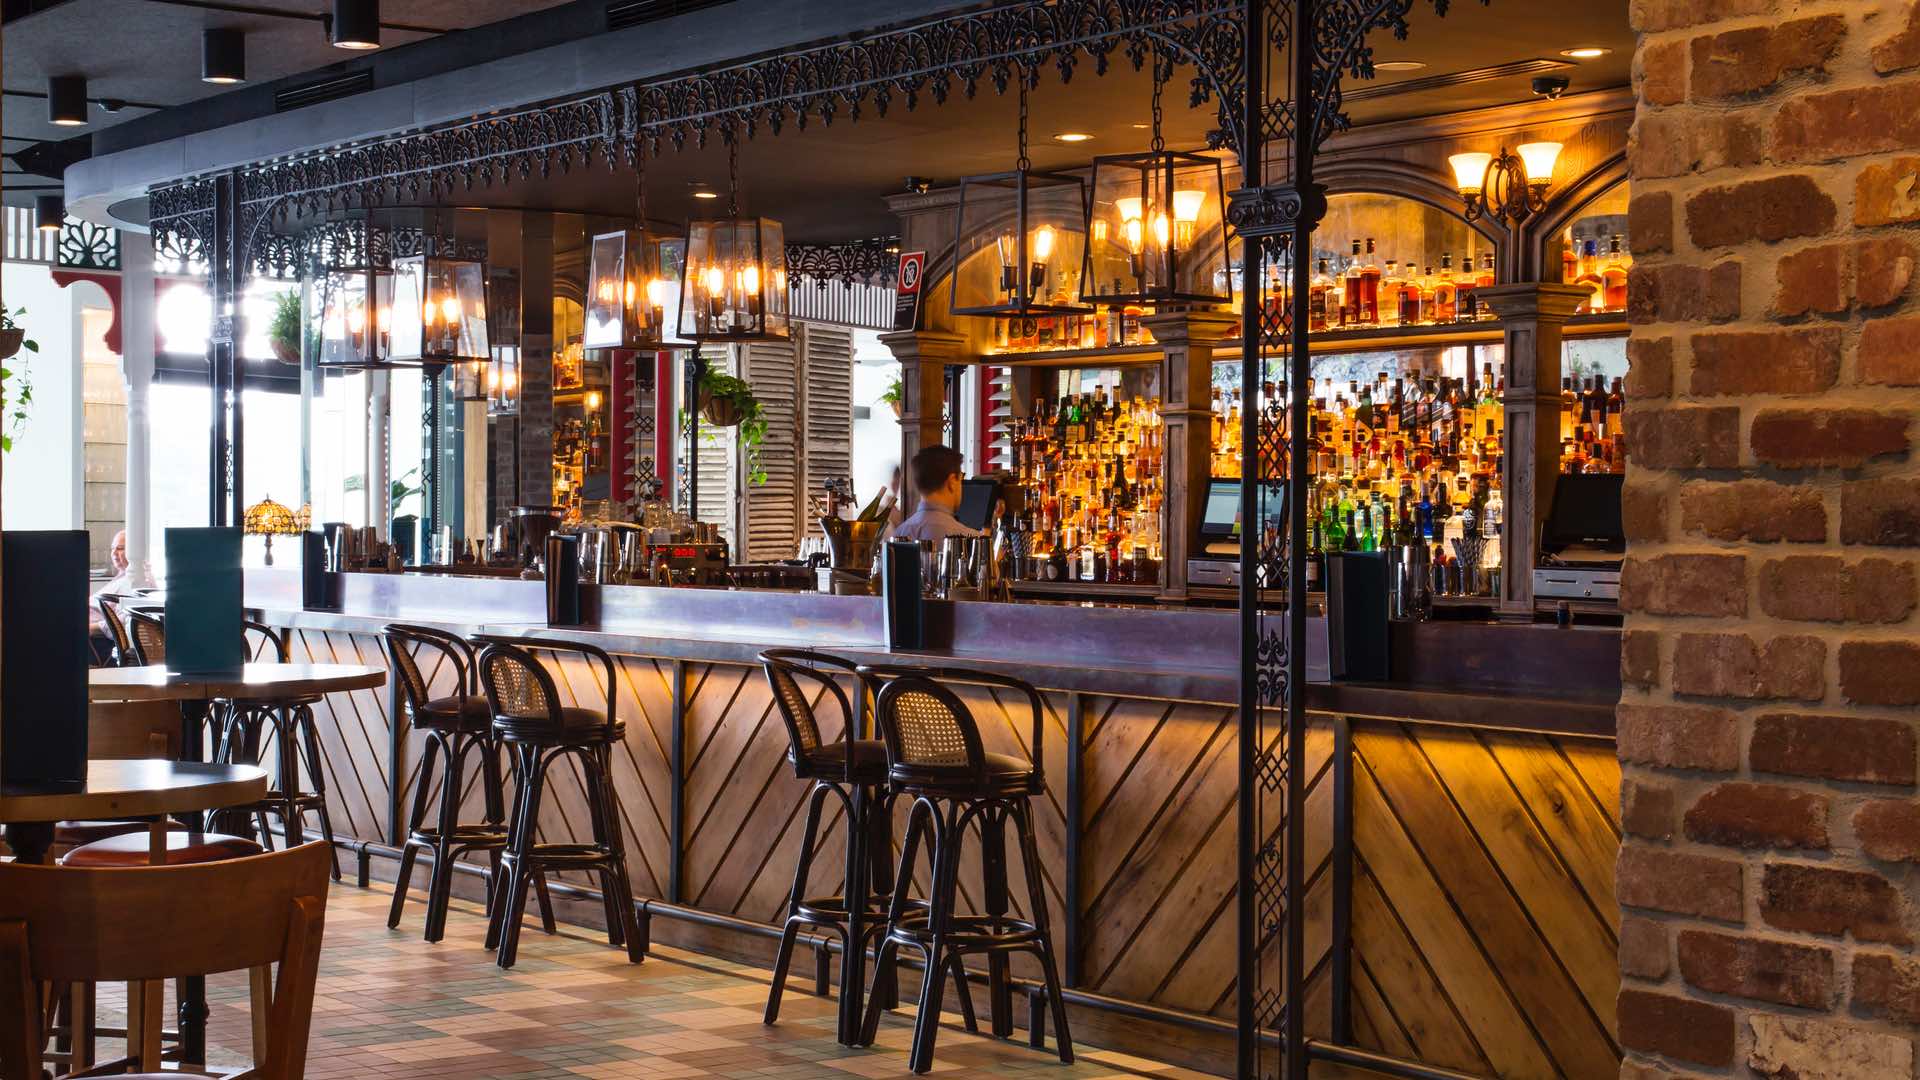 Nola Smokehouse bar and dining room - one of the best Sydney CBD restaurants